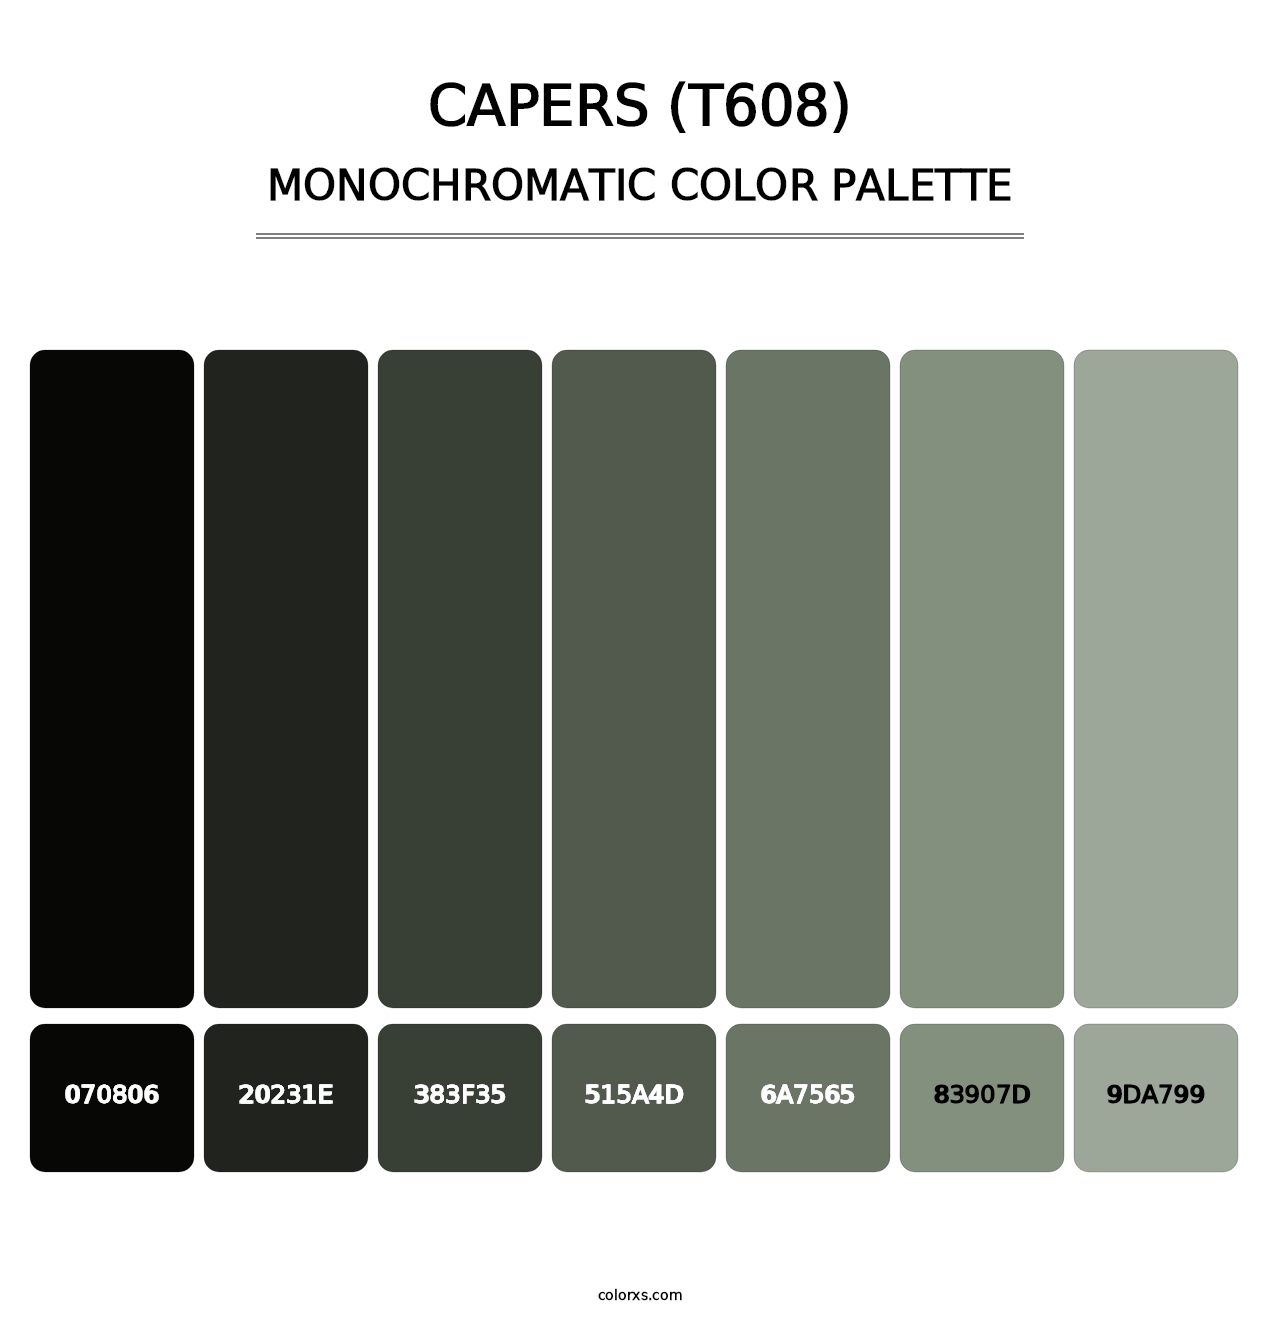 Capers (T608) - Monochromatic Color Palette